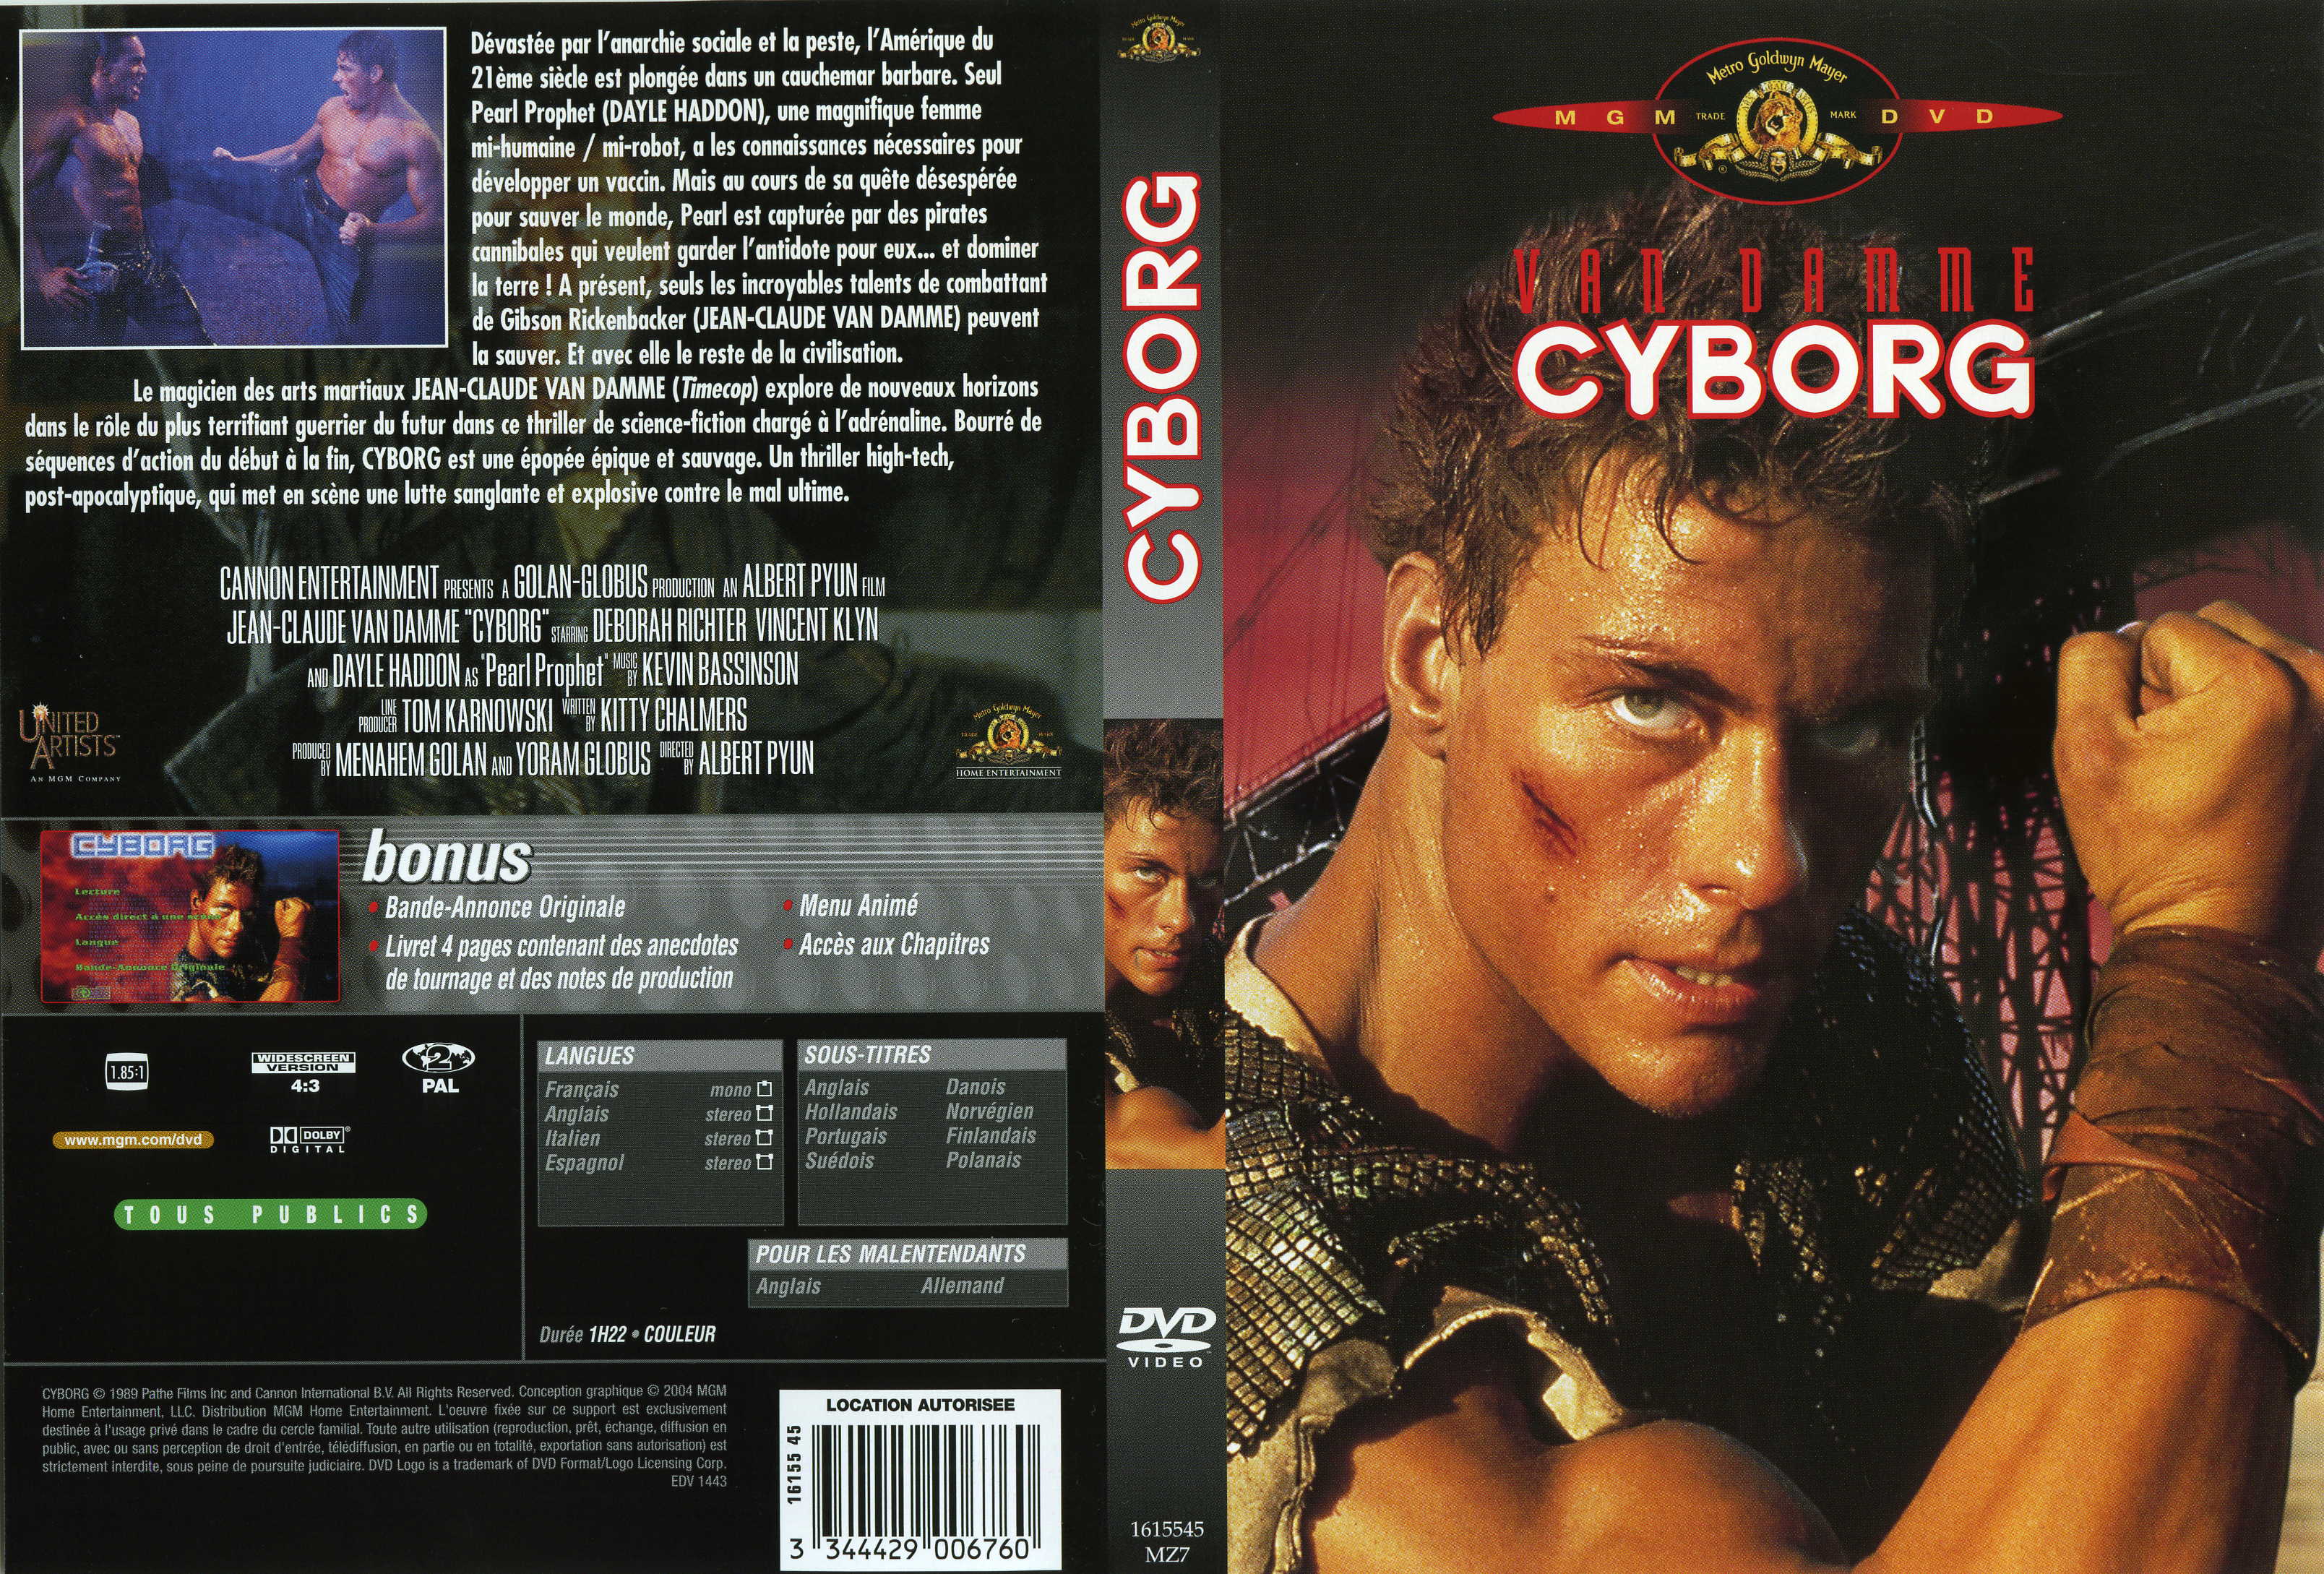 Jaquette DVD Cyborg v2